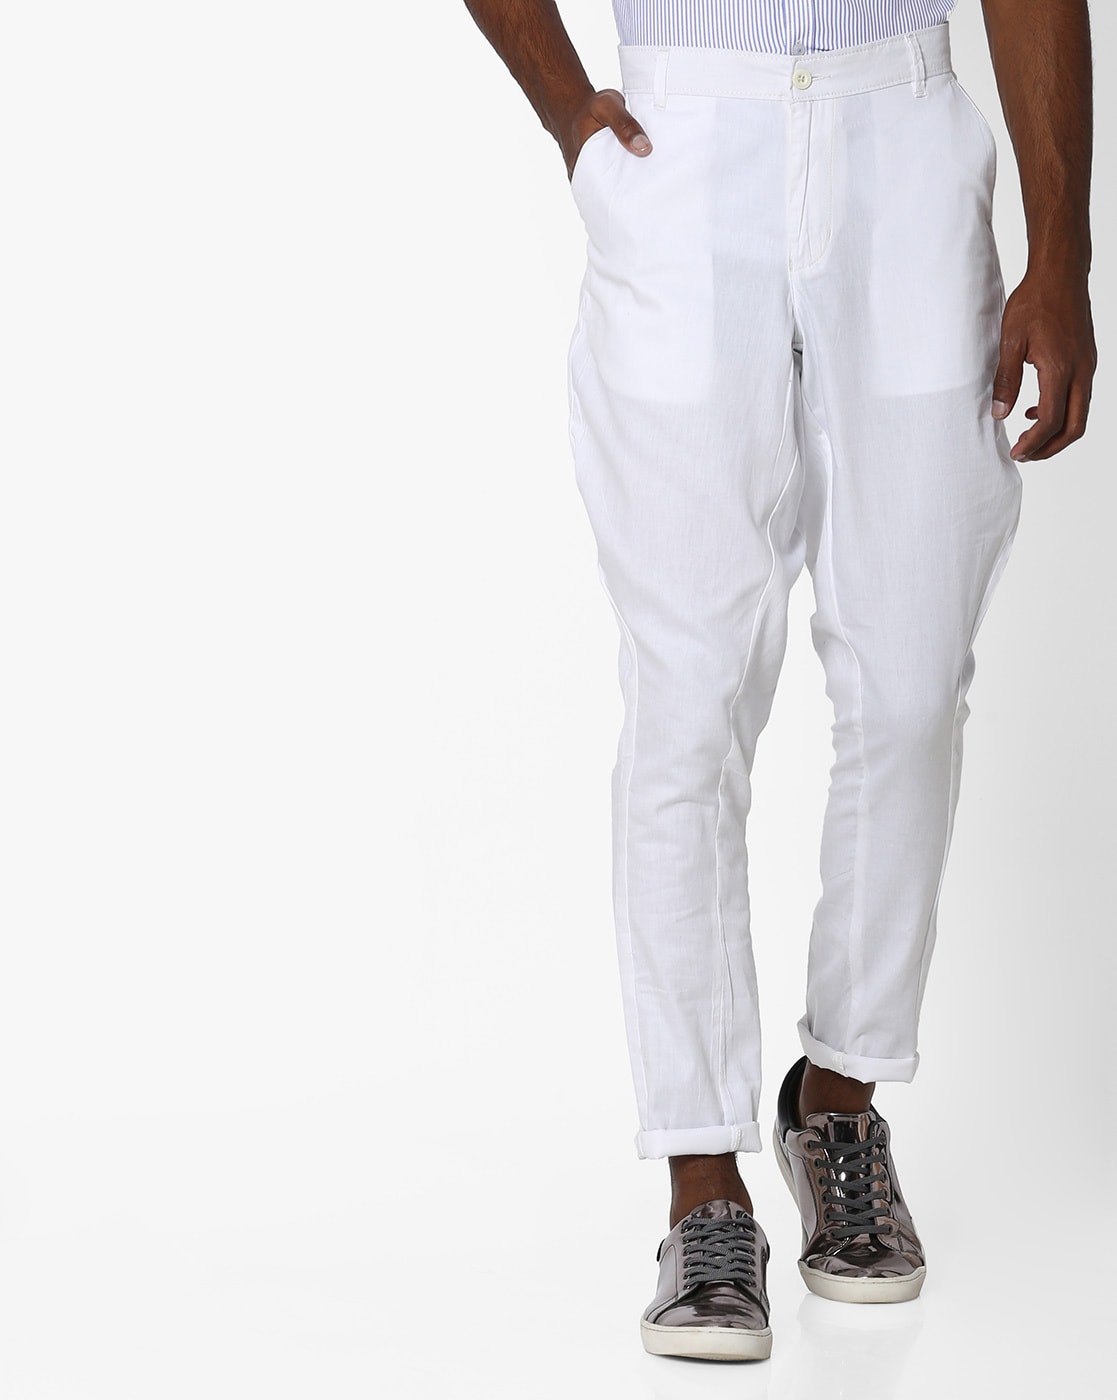 Buy Two Piece Jodhpuri Suit With Bottom in Navy Blue Online | The HUB